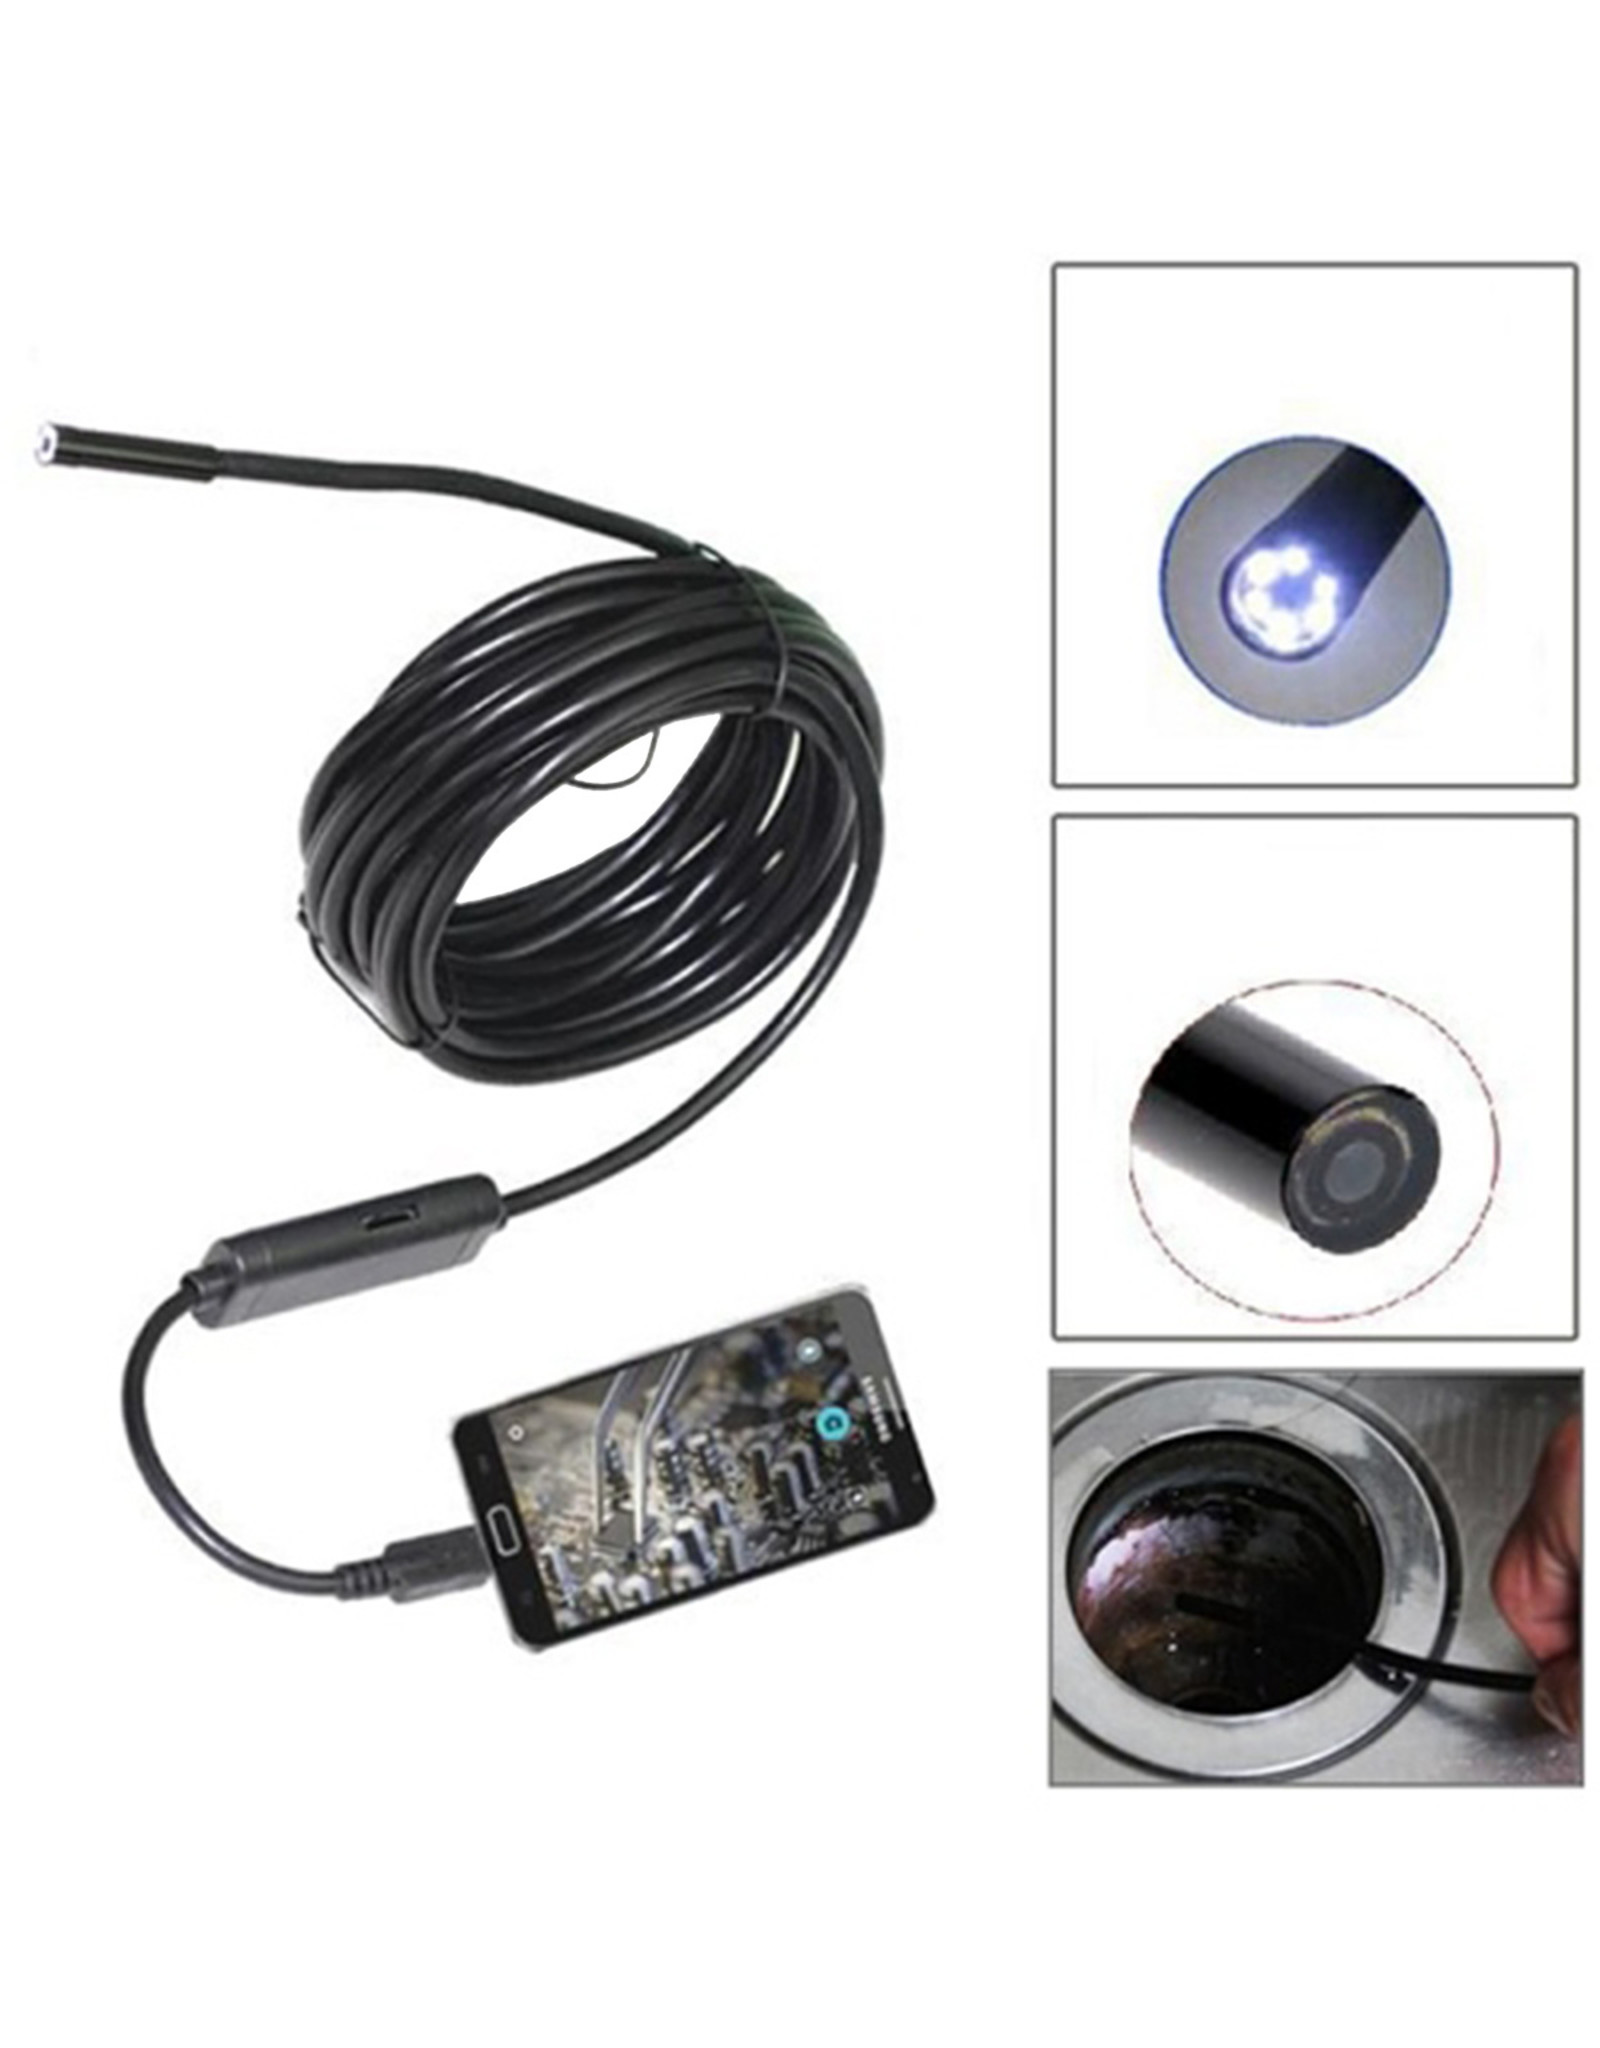 Merkloos Endoscoop Camera Voor Android - Endoscoop - Inspectiecamera - Camera - Draadcamera